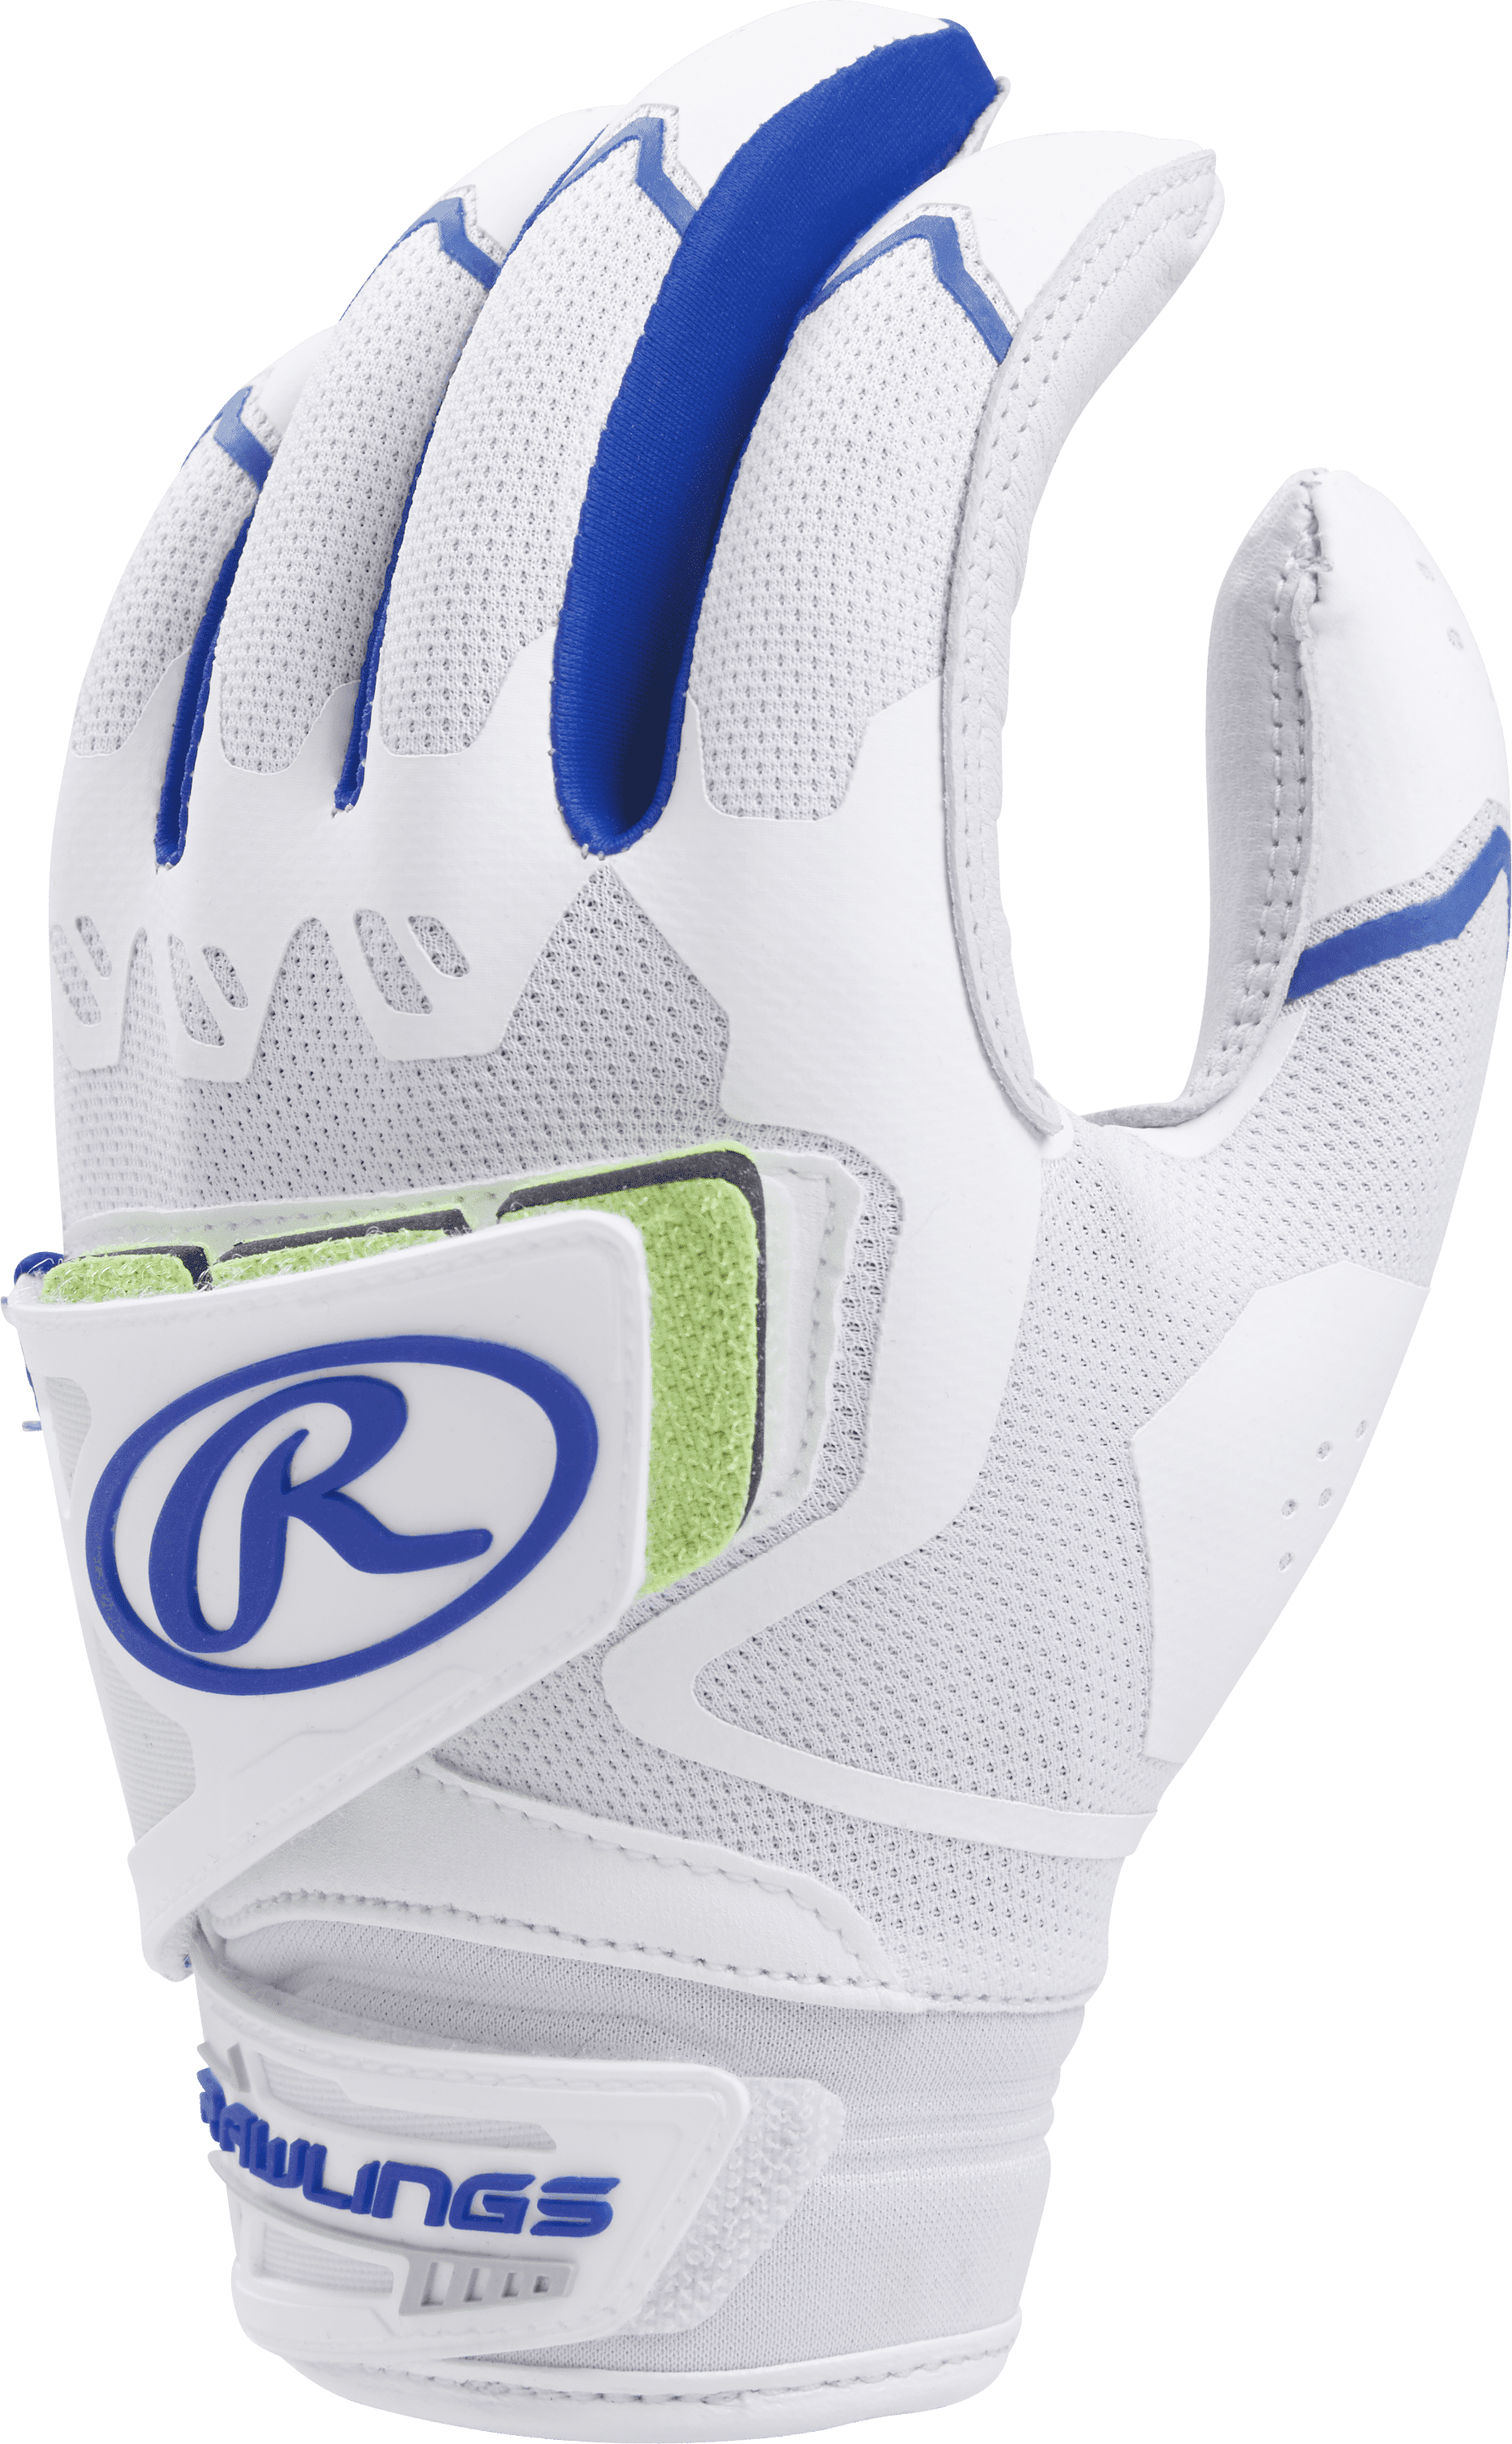 Rawlings Workhorse 950 Series Adult Batting Baseball Gloves